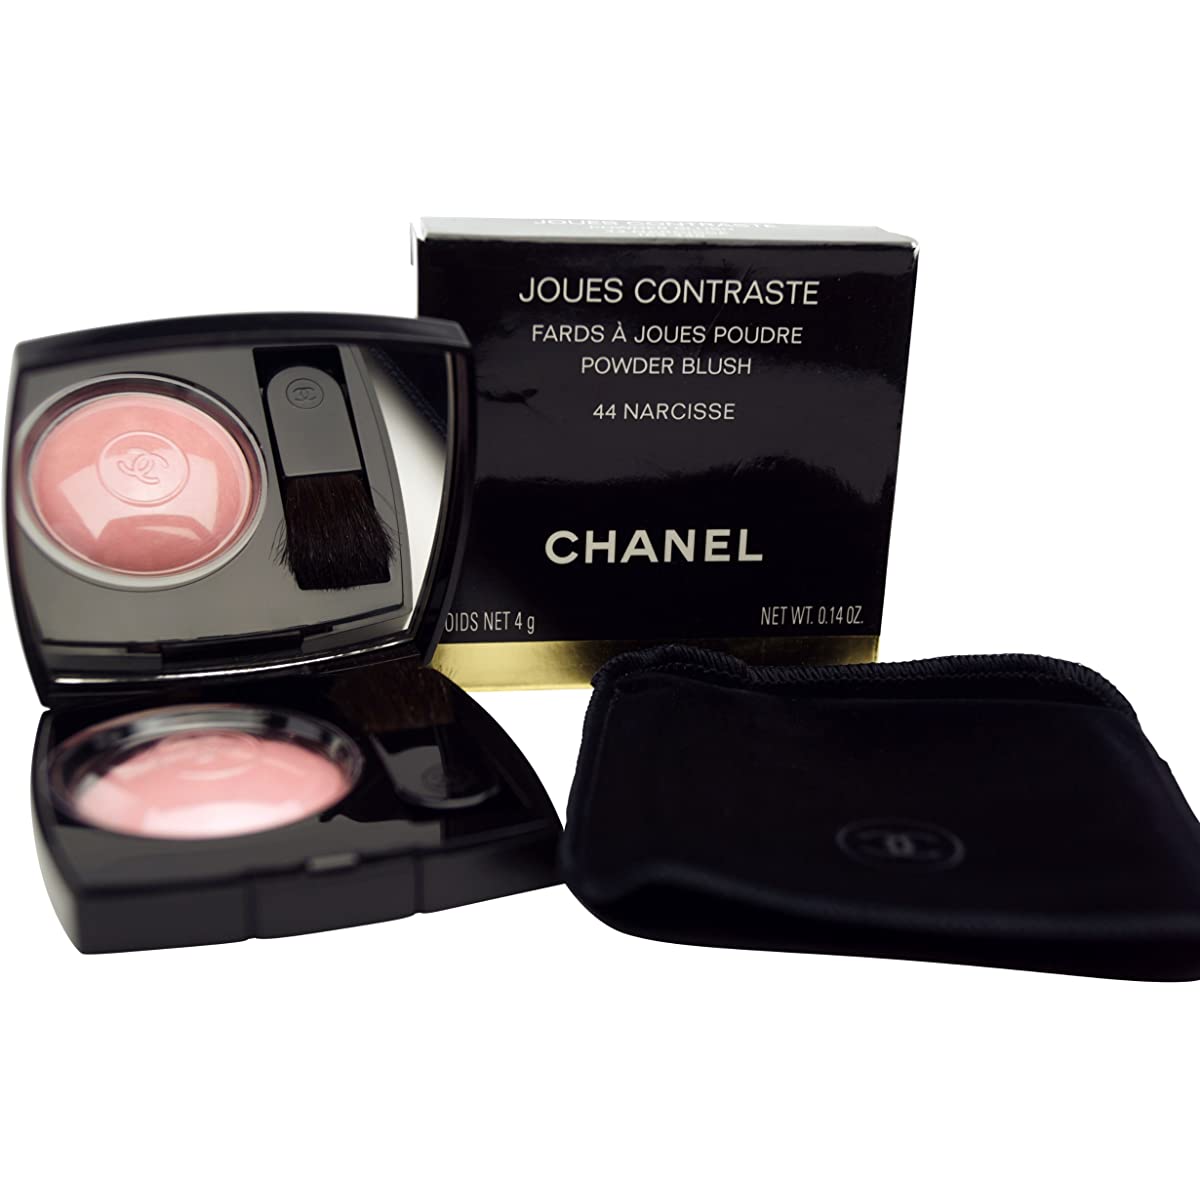 Chanel Joues Contraste Powder Blush Narcisse No. 44